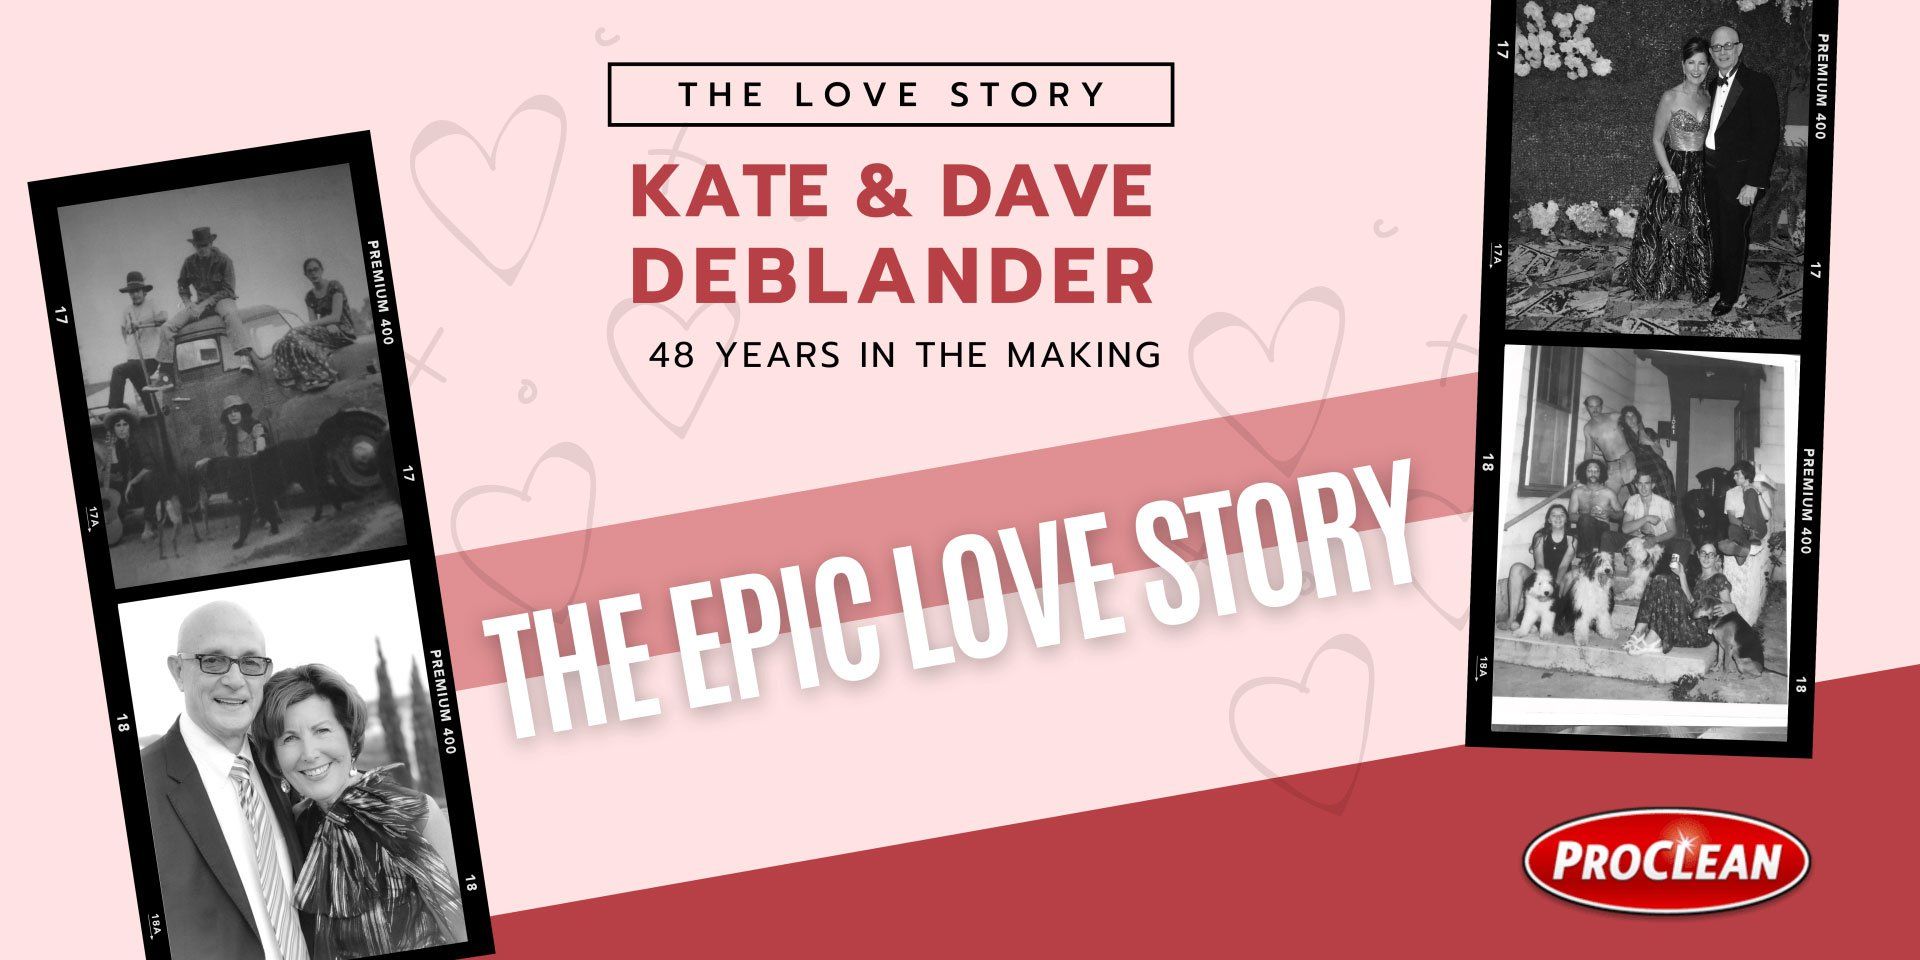 The Epic Love Story: The DeBlander's